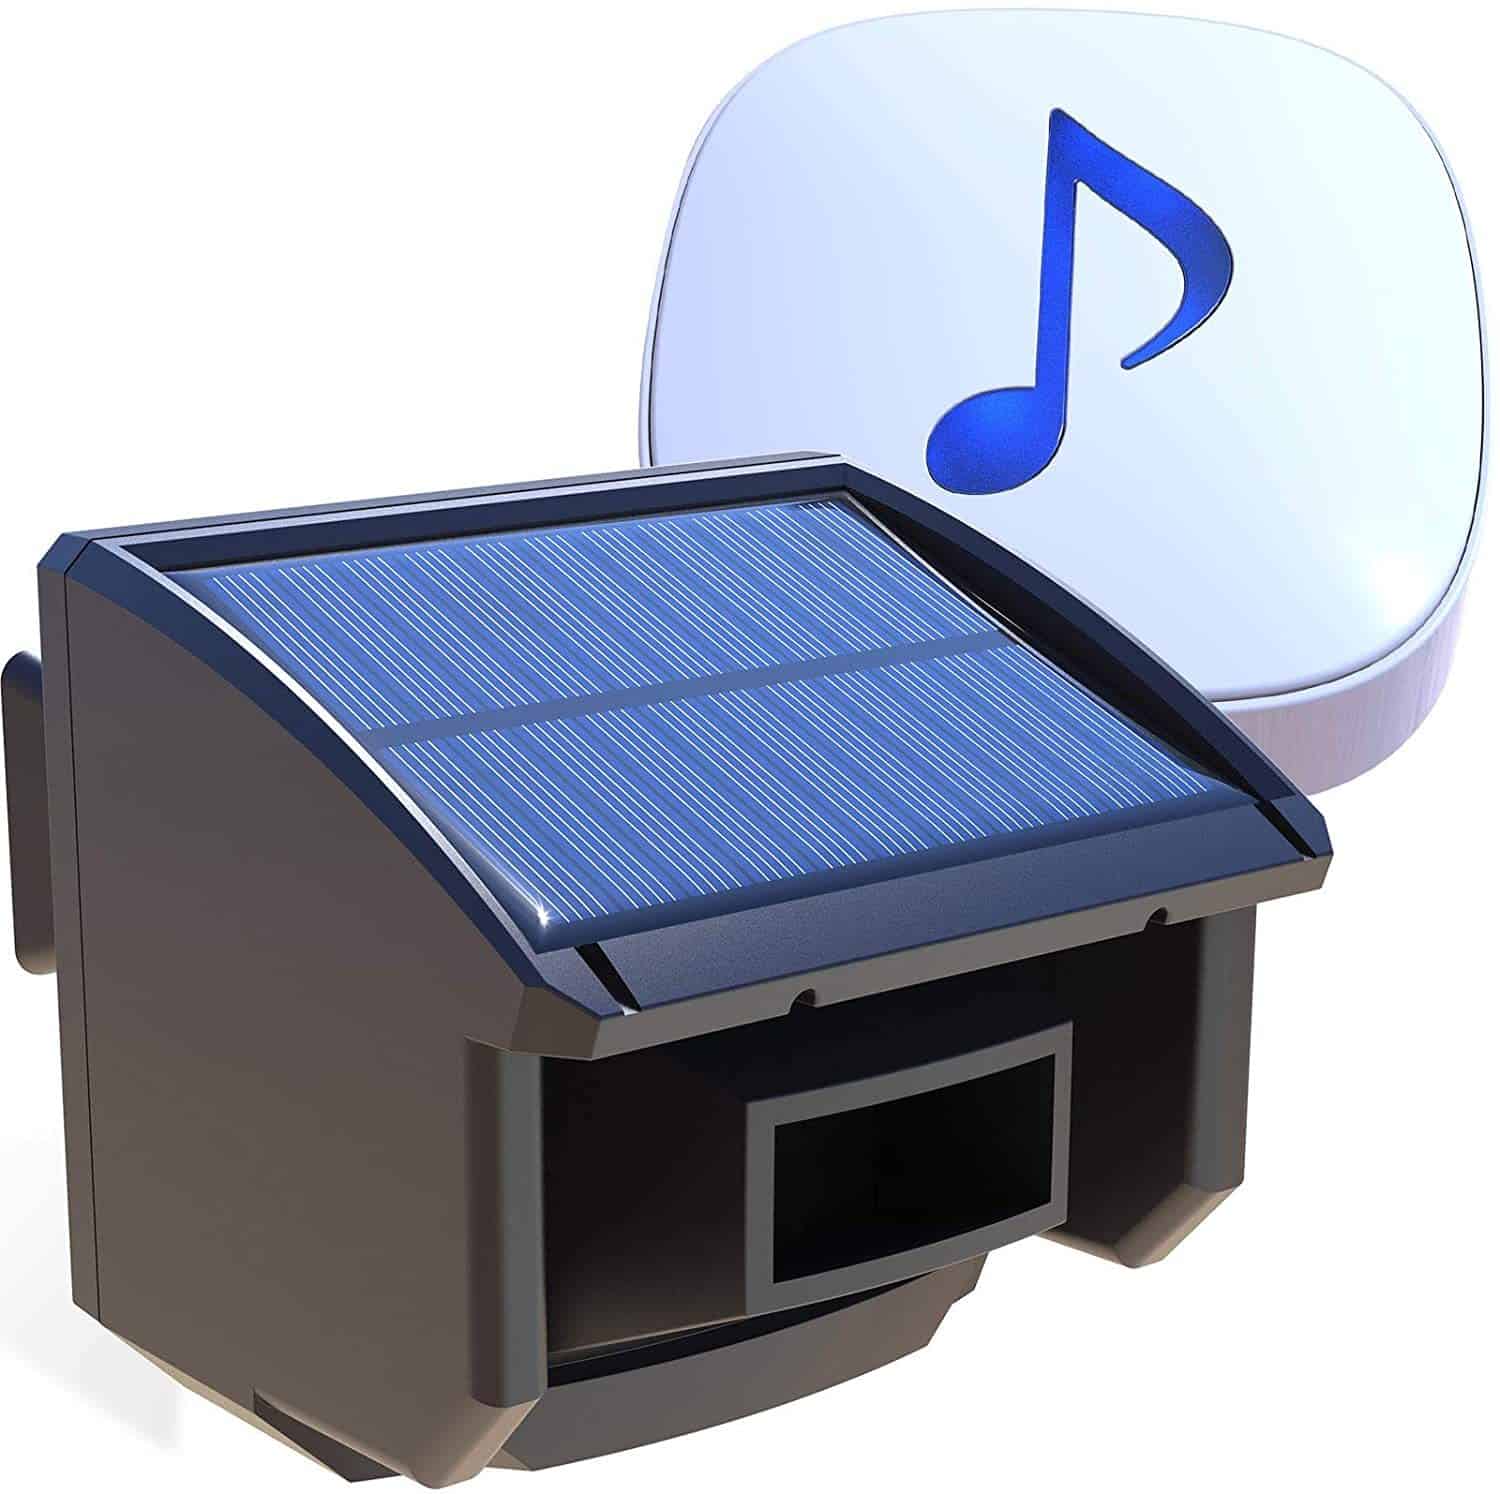 Htzsafe Outdoor Solar Powered Alarm System